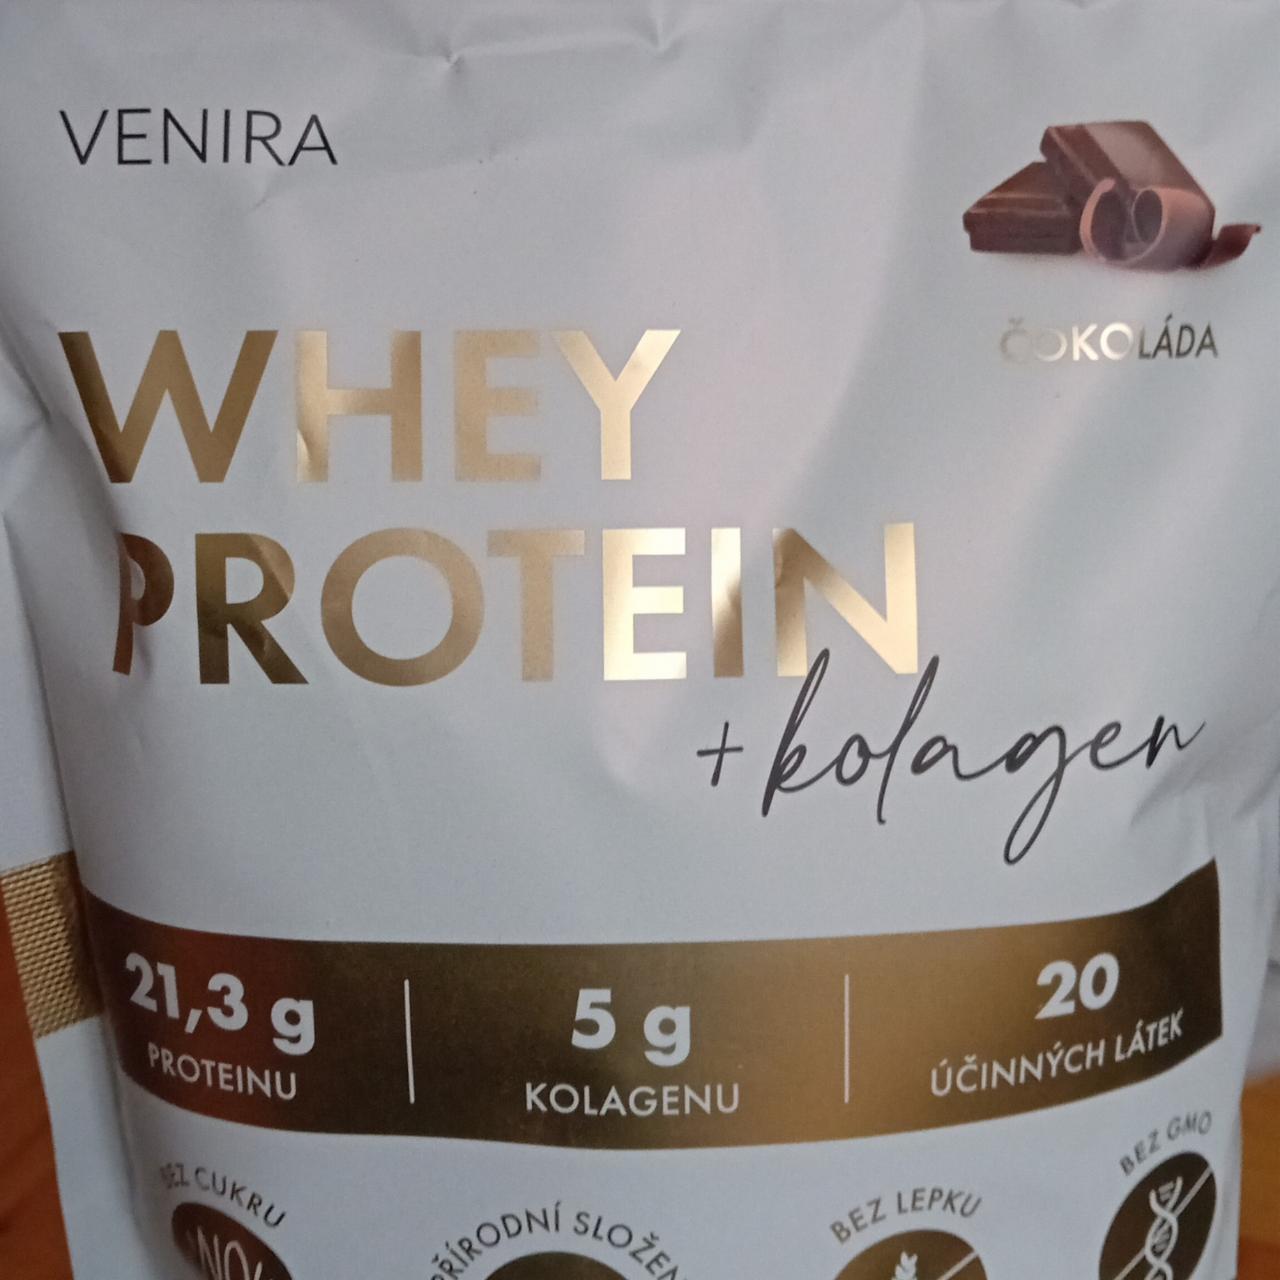 Fotografie - Whey Protein + kolagen Čokoláda Venira